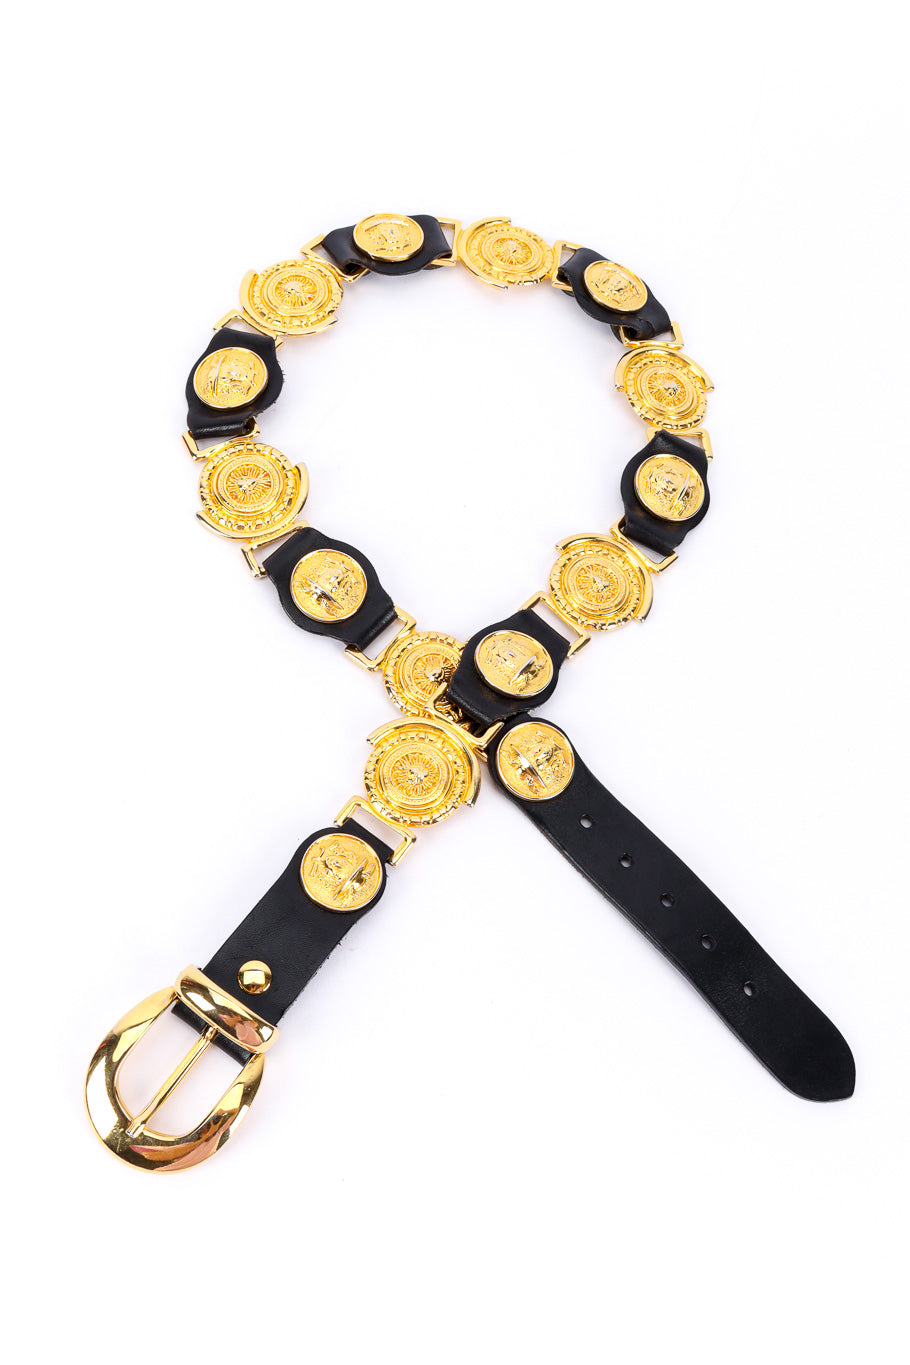 Medallion linked leather belt by Milos on white background looped @recessla